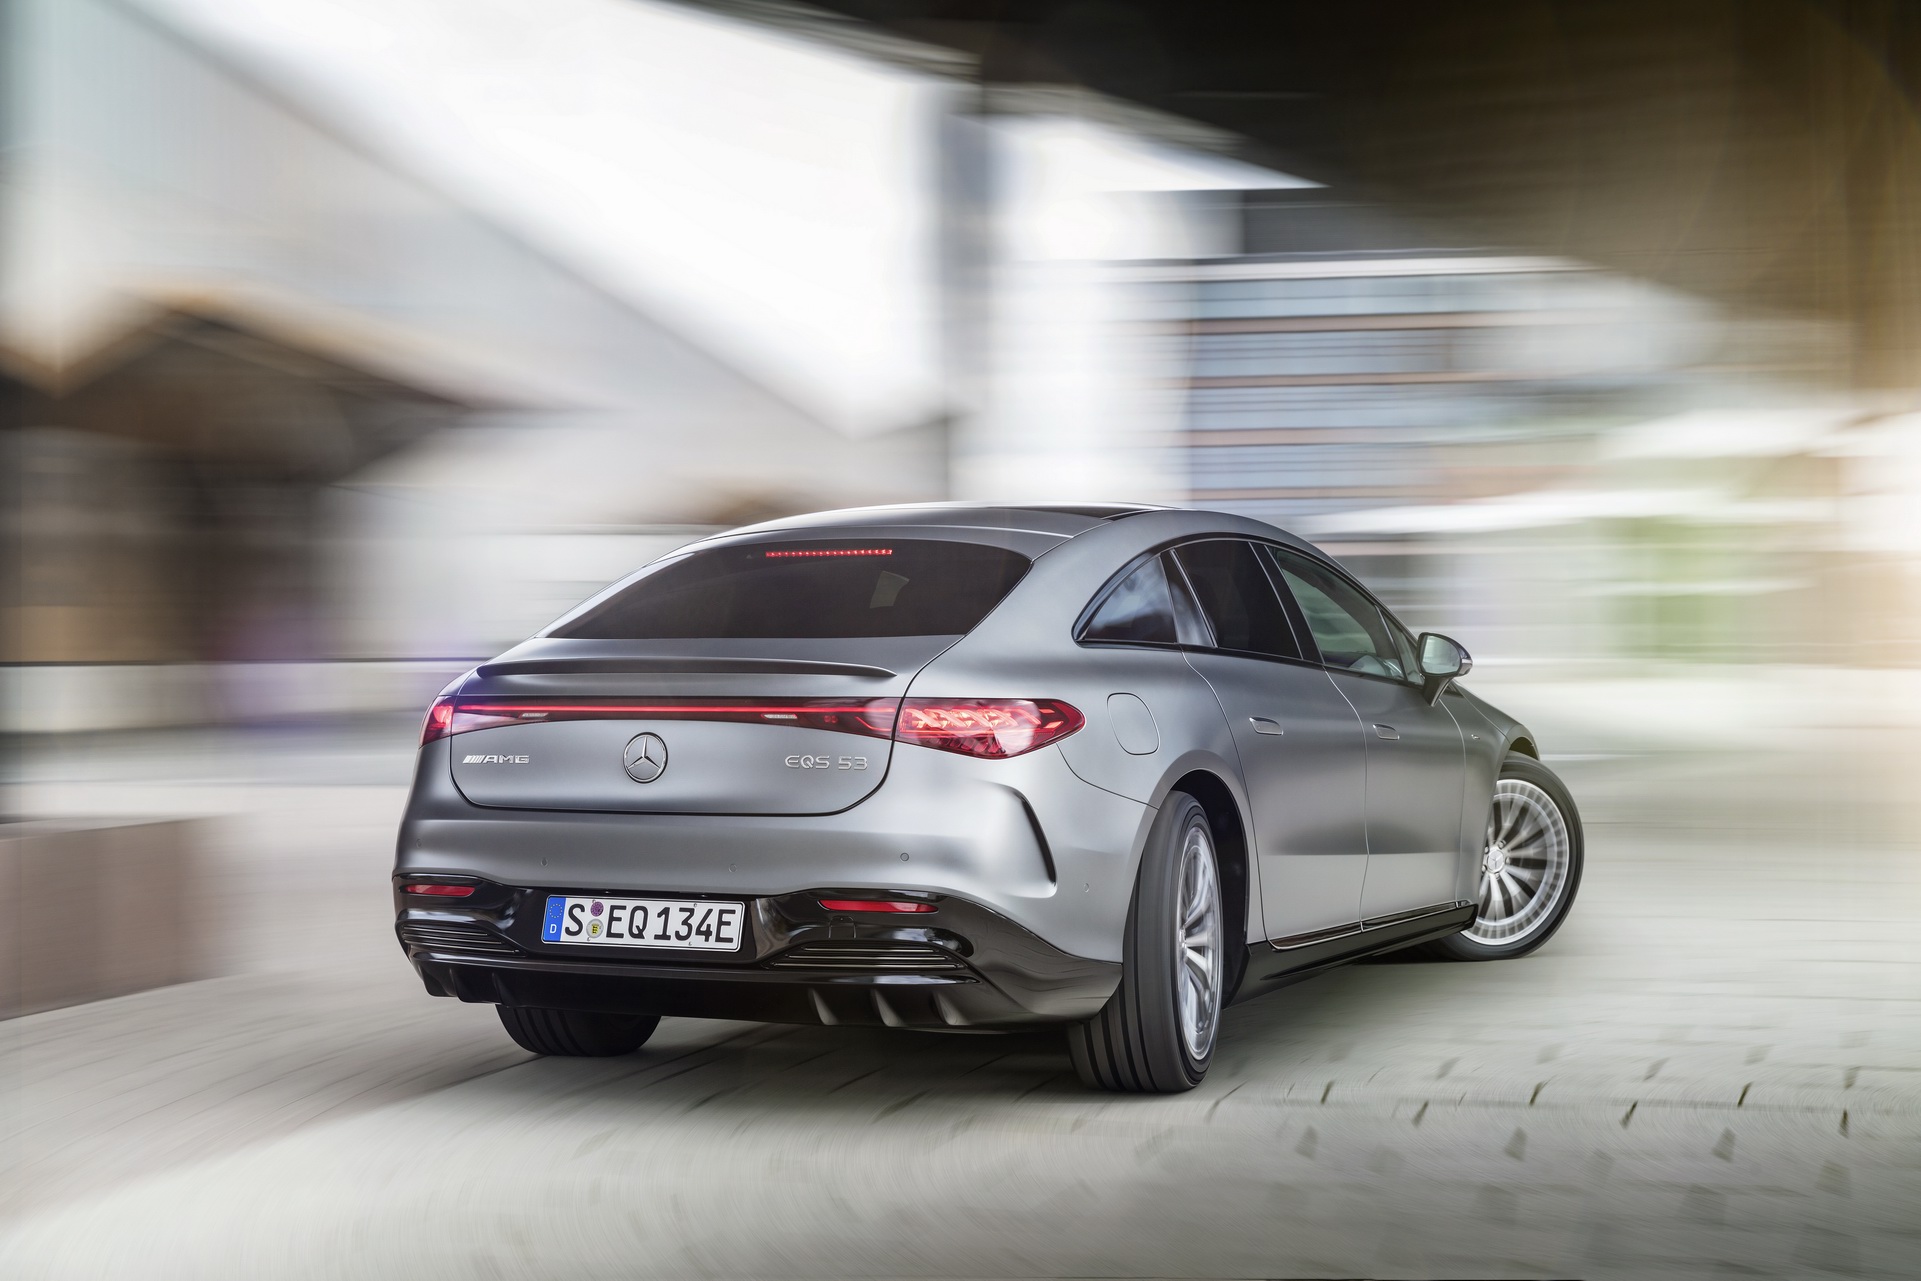 All-new Mercedes EQS: full story on luxury EV